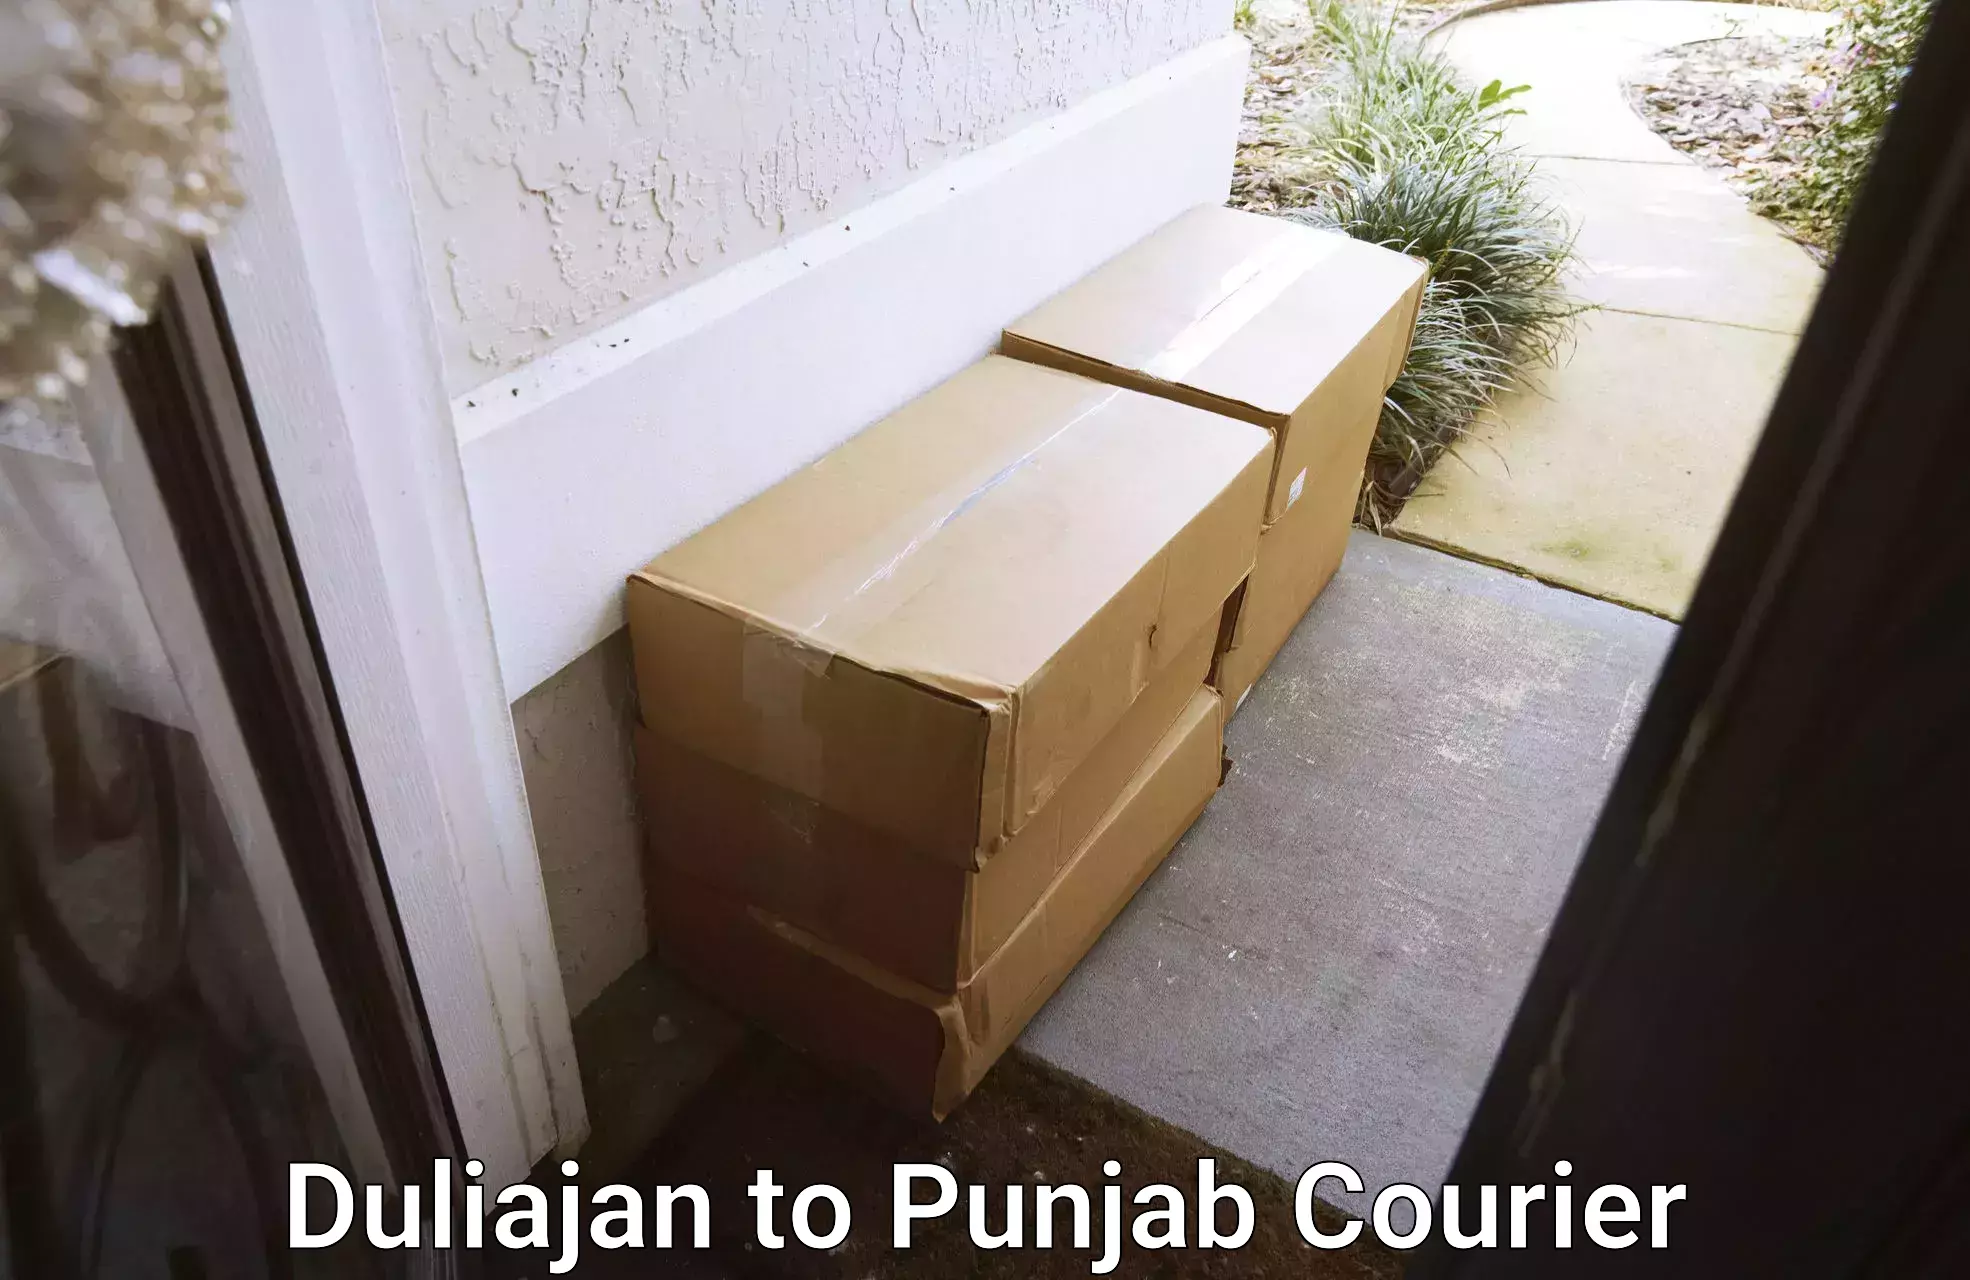 Logistics service provider Duliajan to Ropar